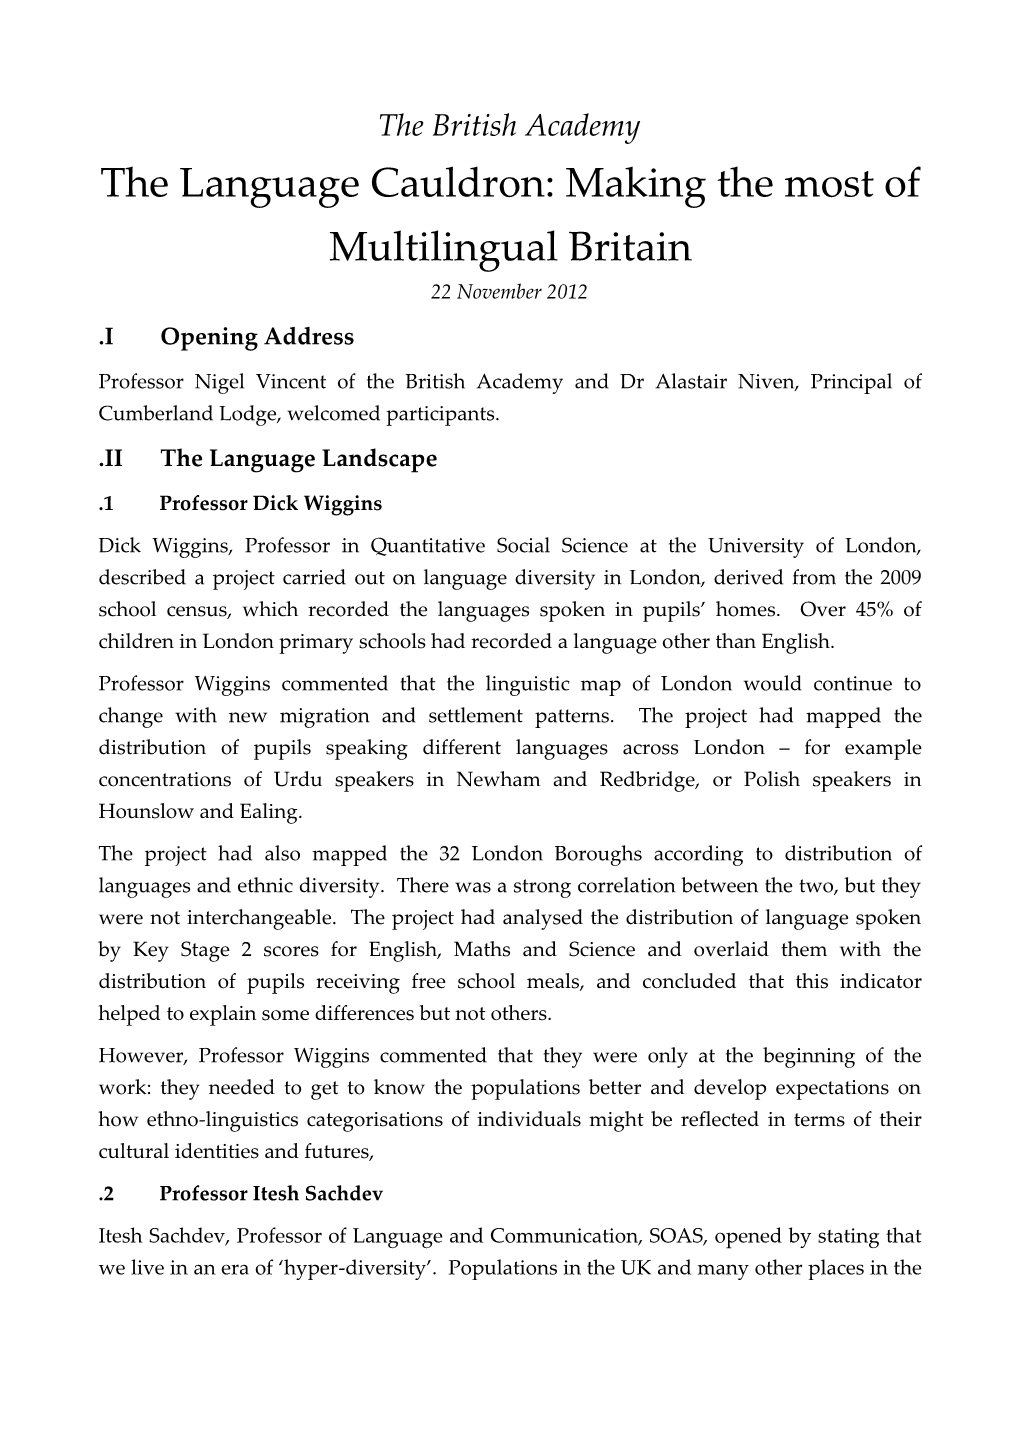 The Language Cauldron: Making the Most of Multilingual Britainbritish Academy